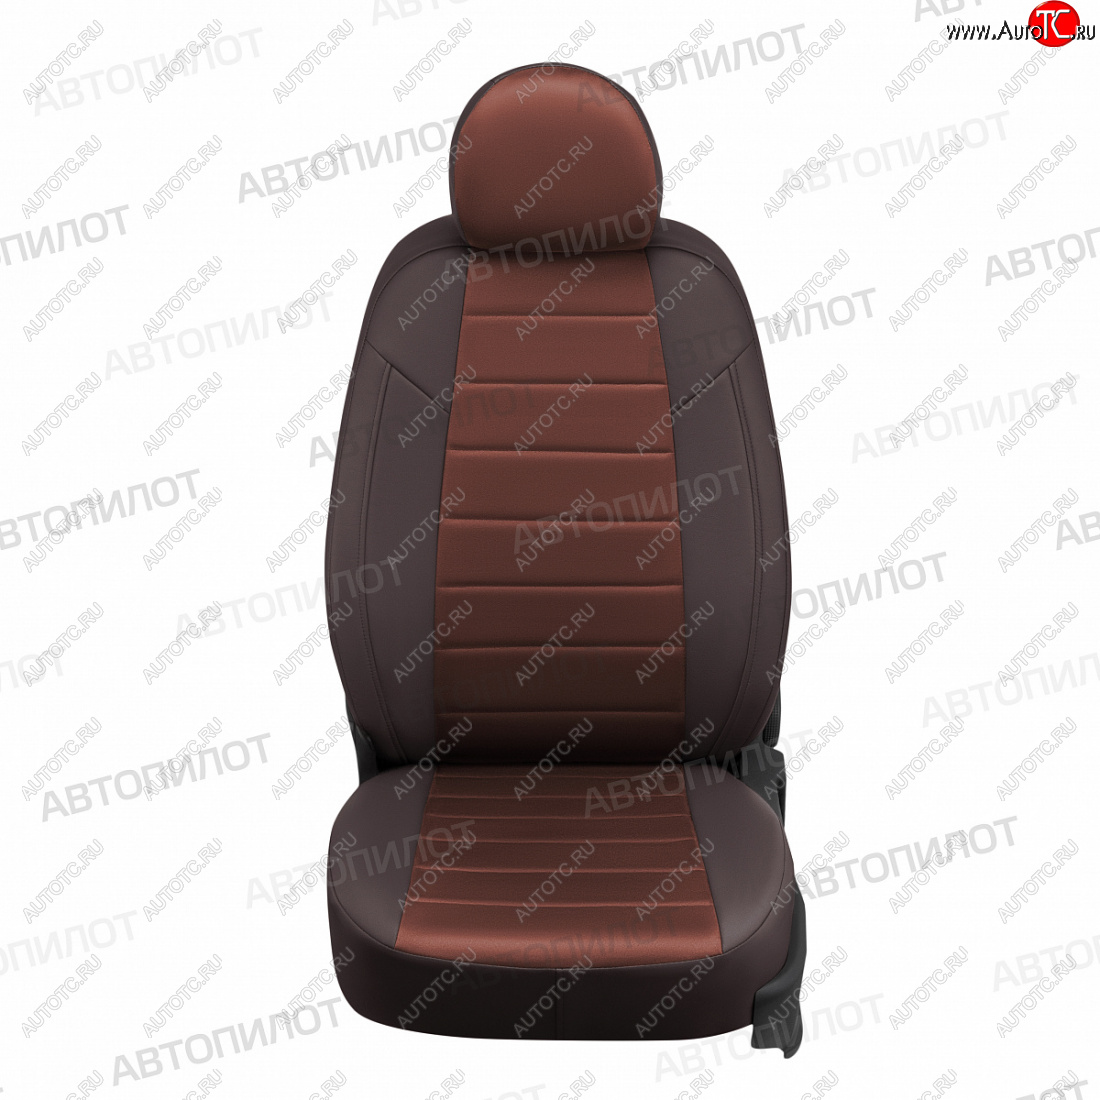 13 449 р. Чехлы сидений (экокожа/алькантара) Автопилот  KIA Ceed  2 JD (2012-2018) (шоколад)